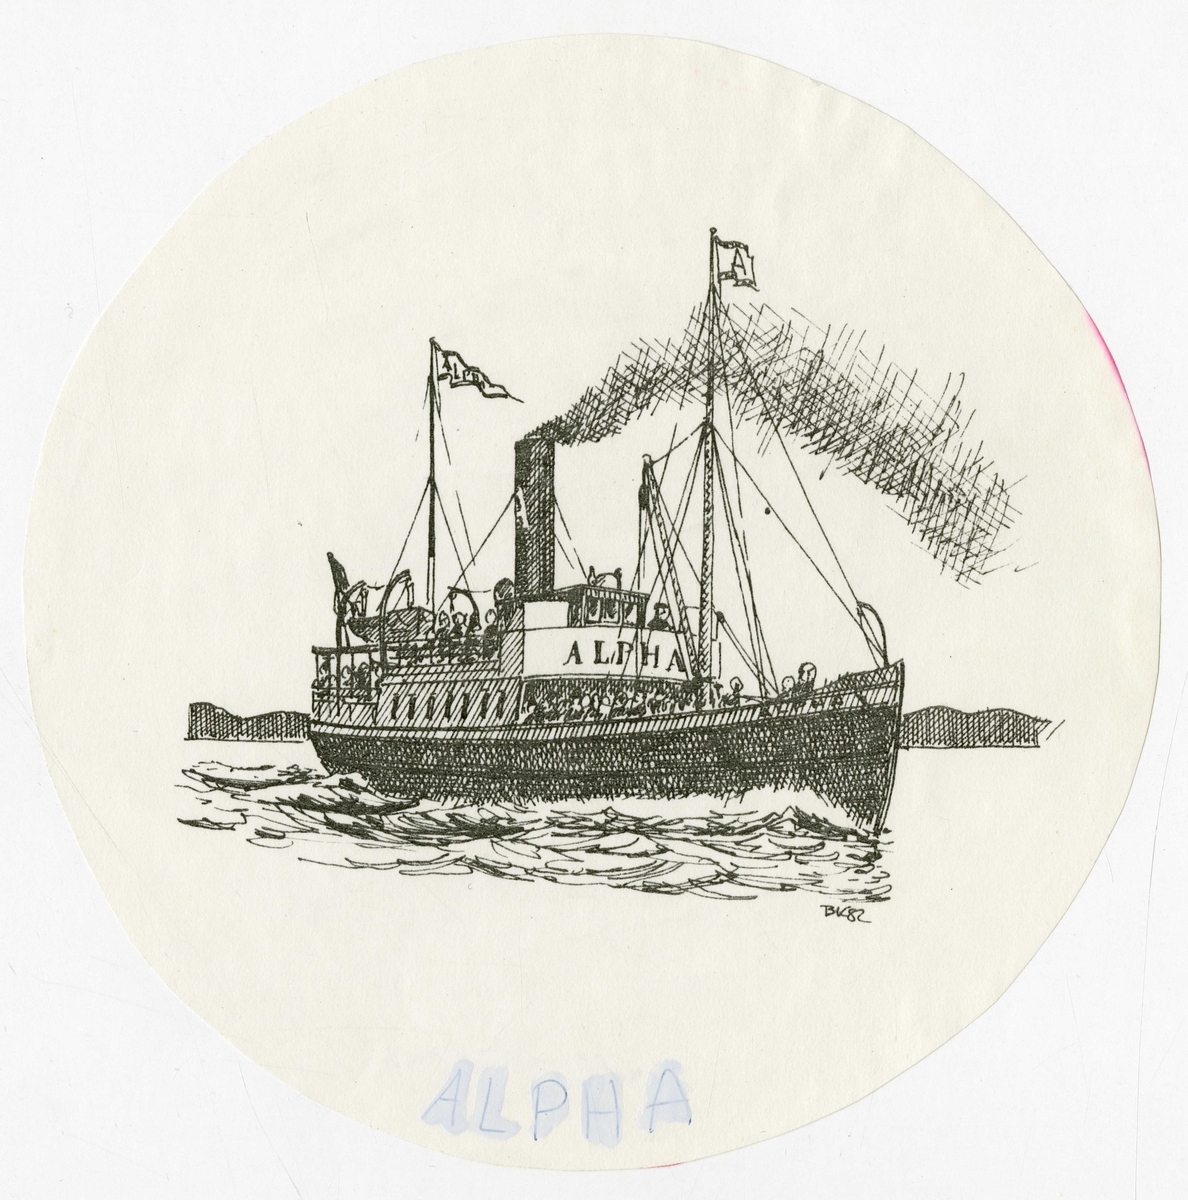 D/S 'Alpha' (Ex. Fyris)(b.1863, William Lindbergs mek. Verkstad (Södra Varvet) Stockholm).